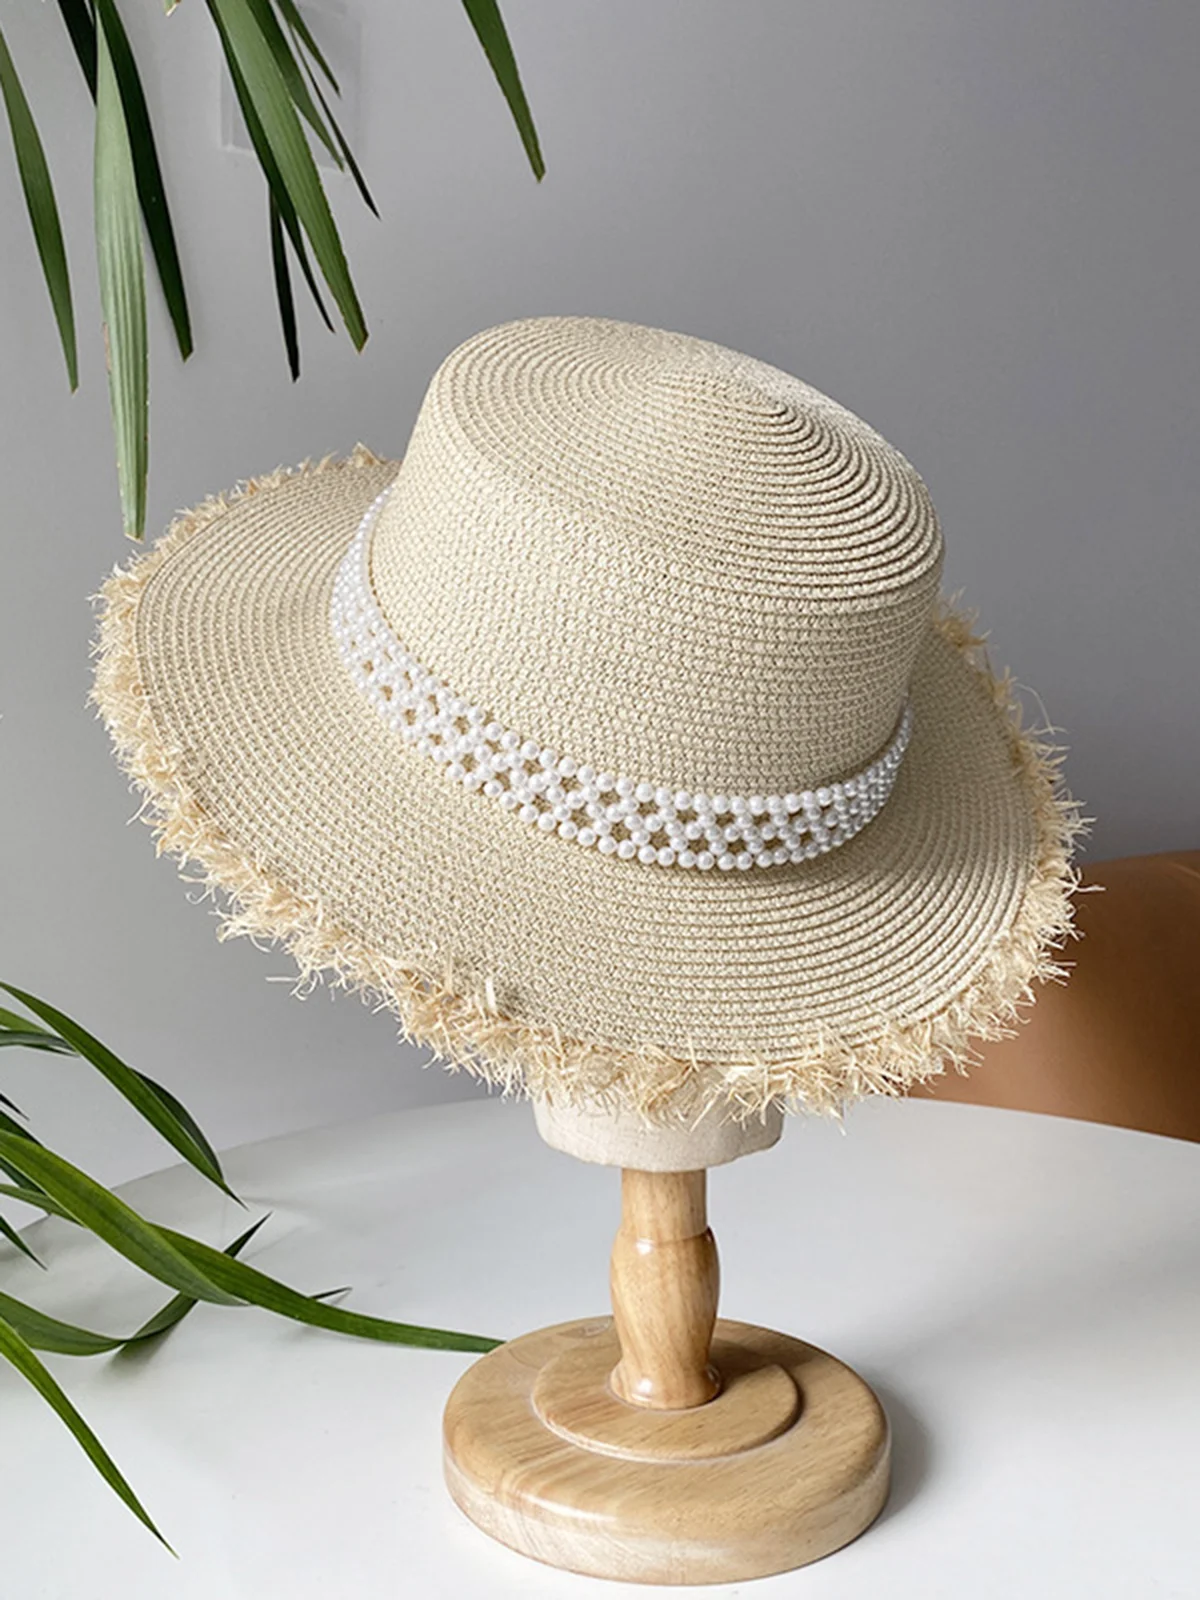 Beach Vacation Imitation Pearls Fringed Straw Hat